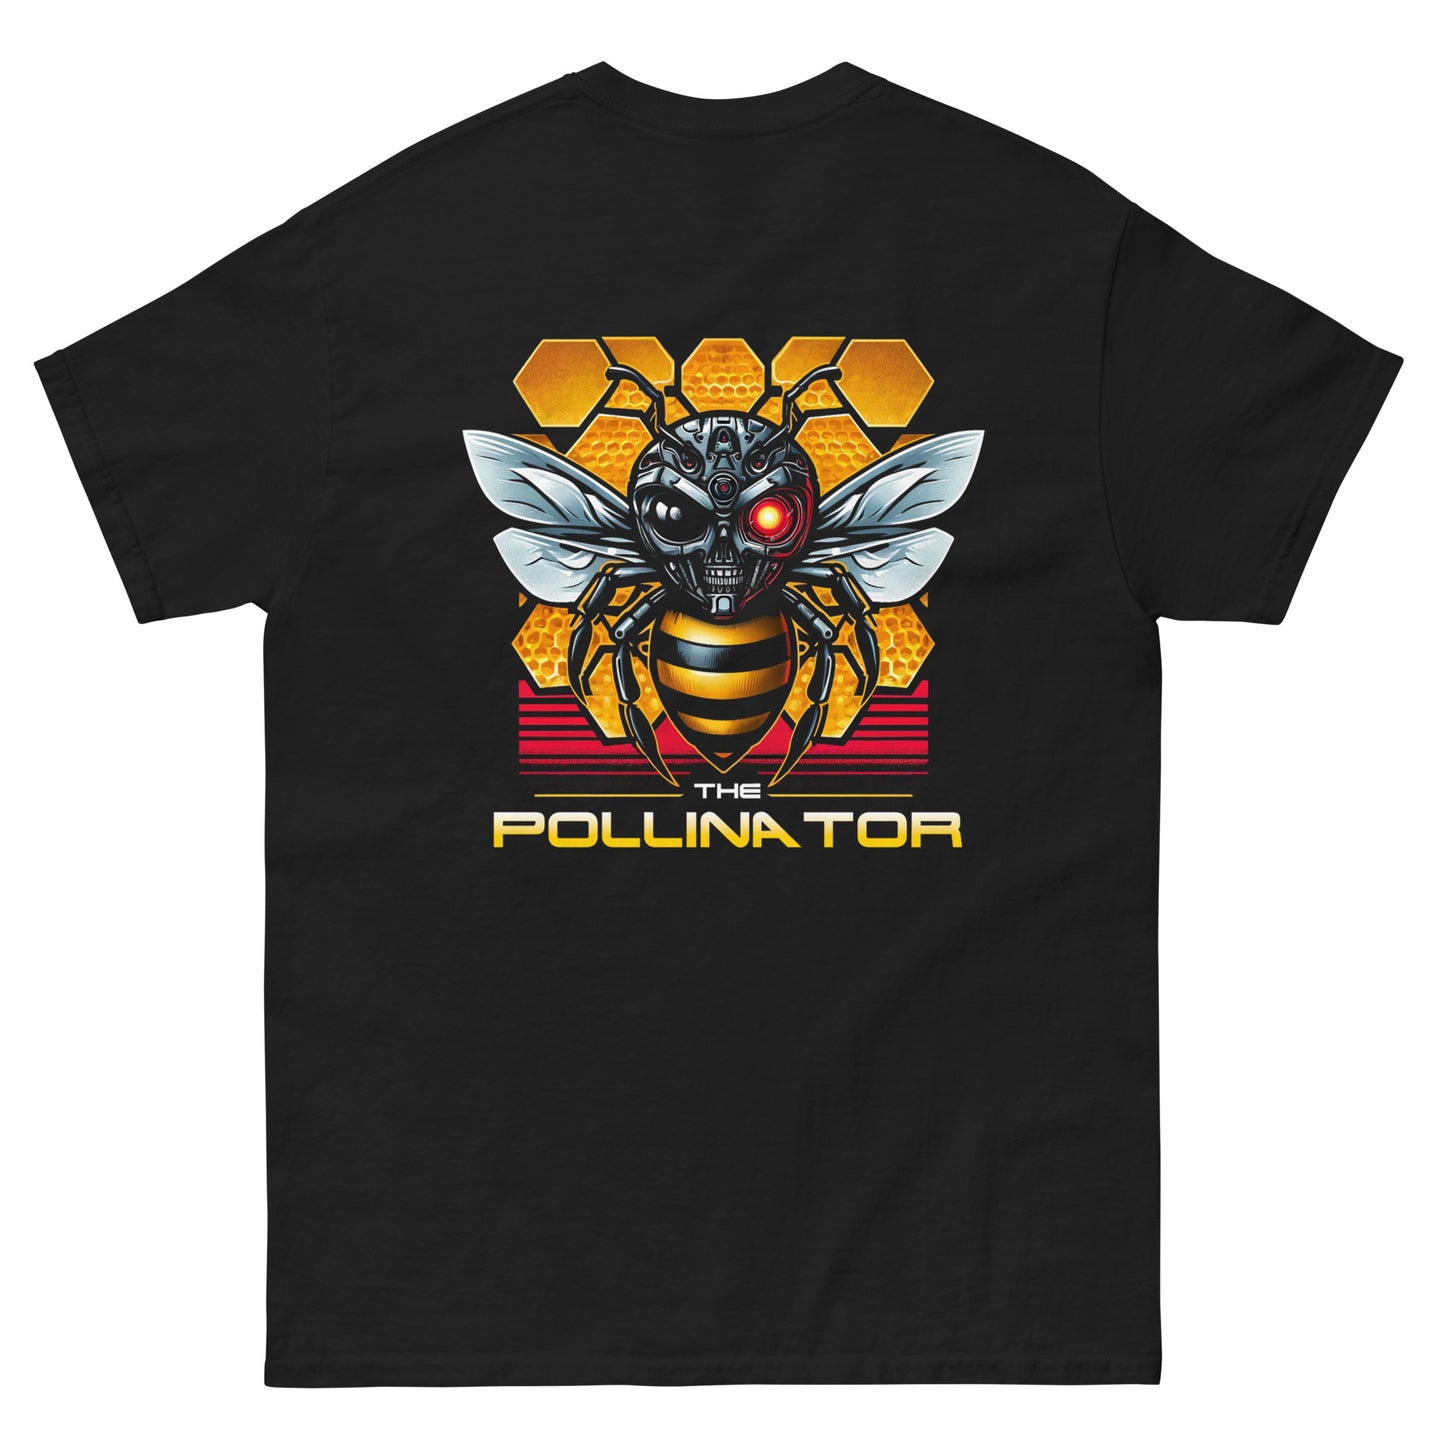 "The Pollinator" Men's classic tee